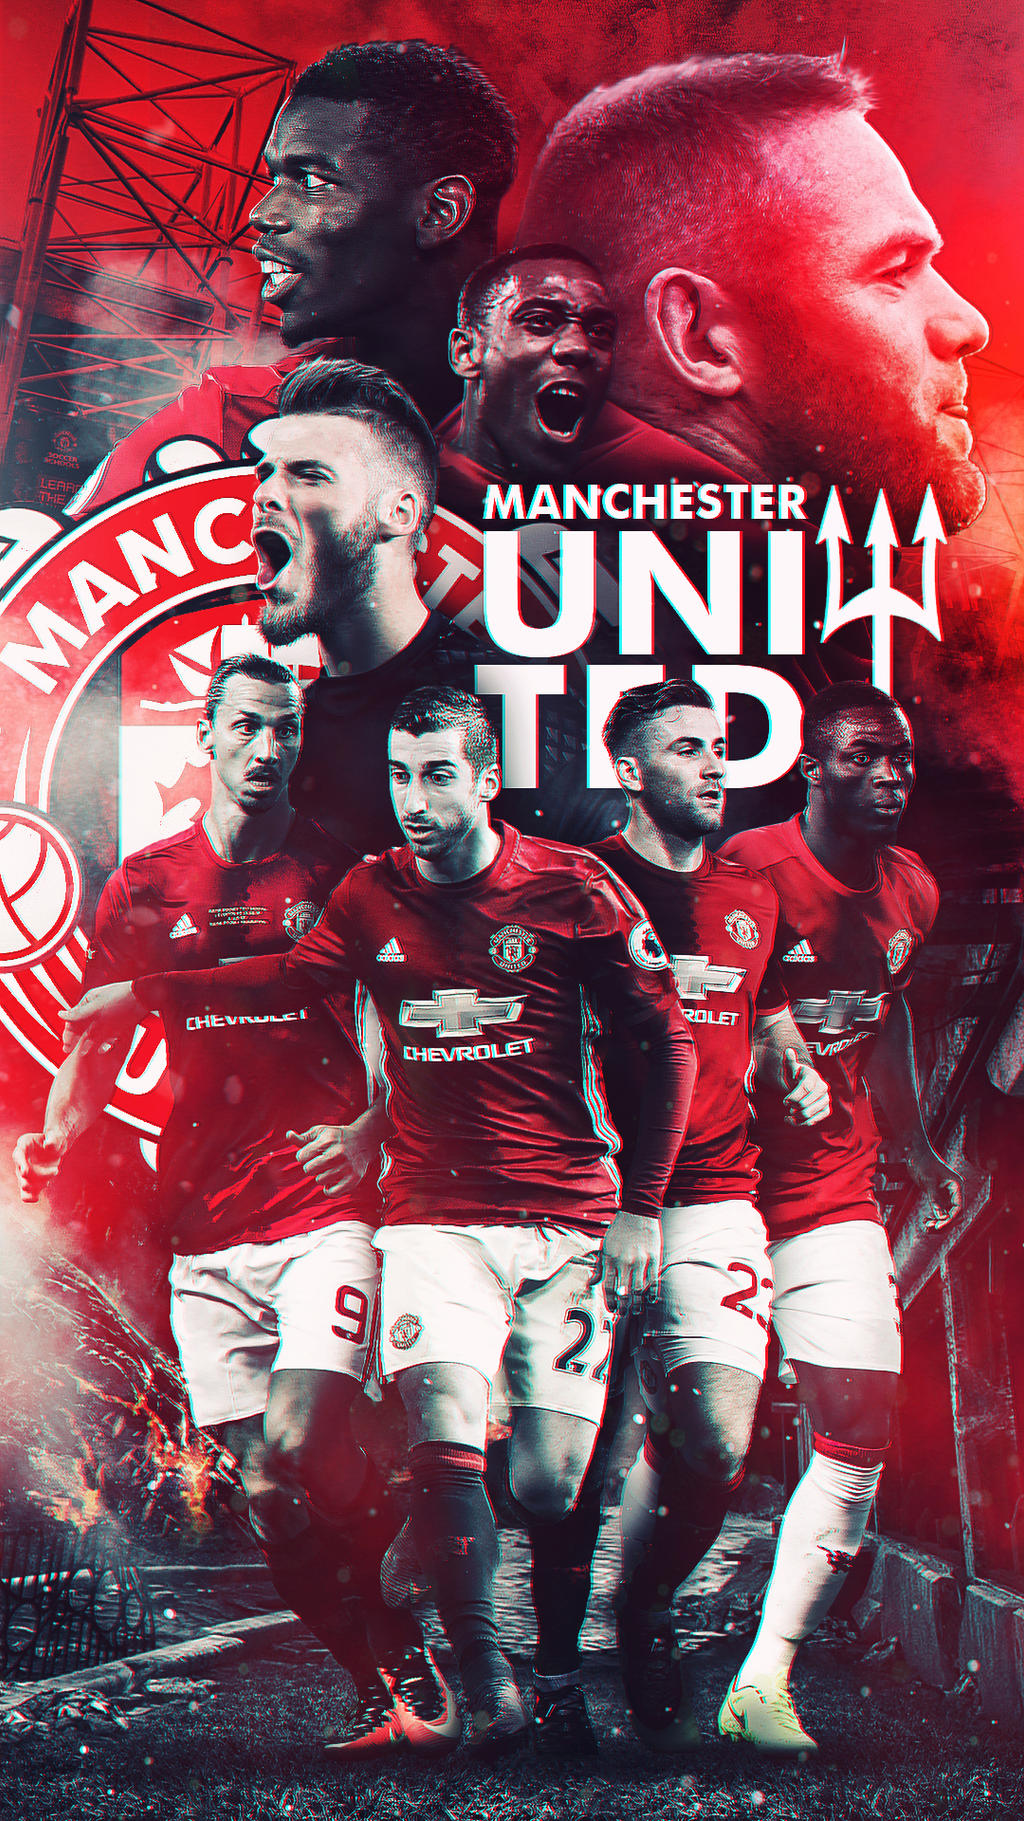 Manchester United - HD Wallpaper by Kerimov23 on DeviantArt